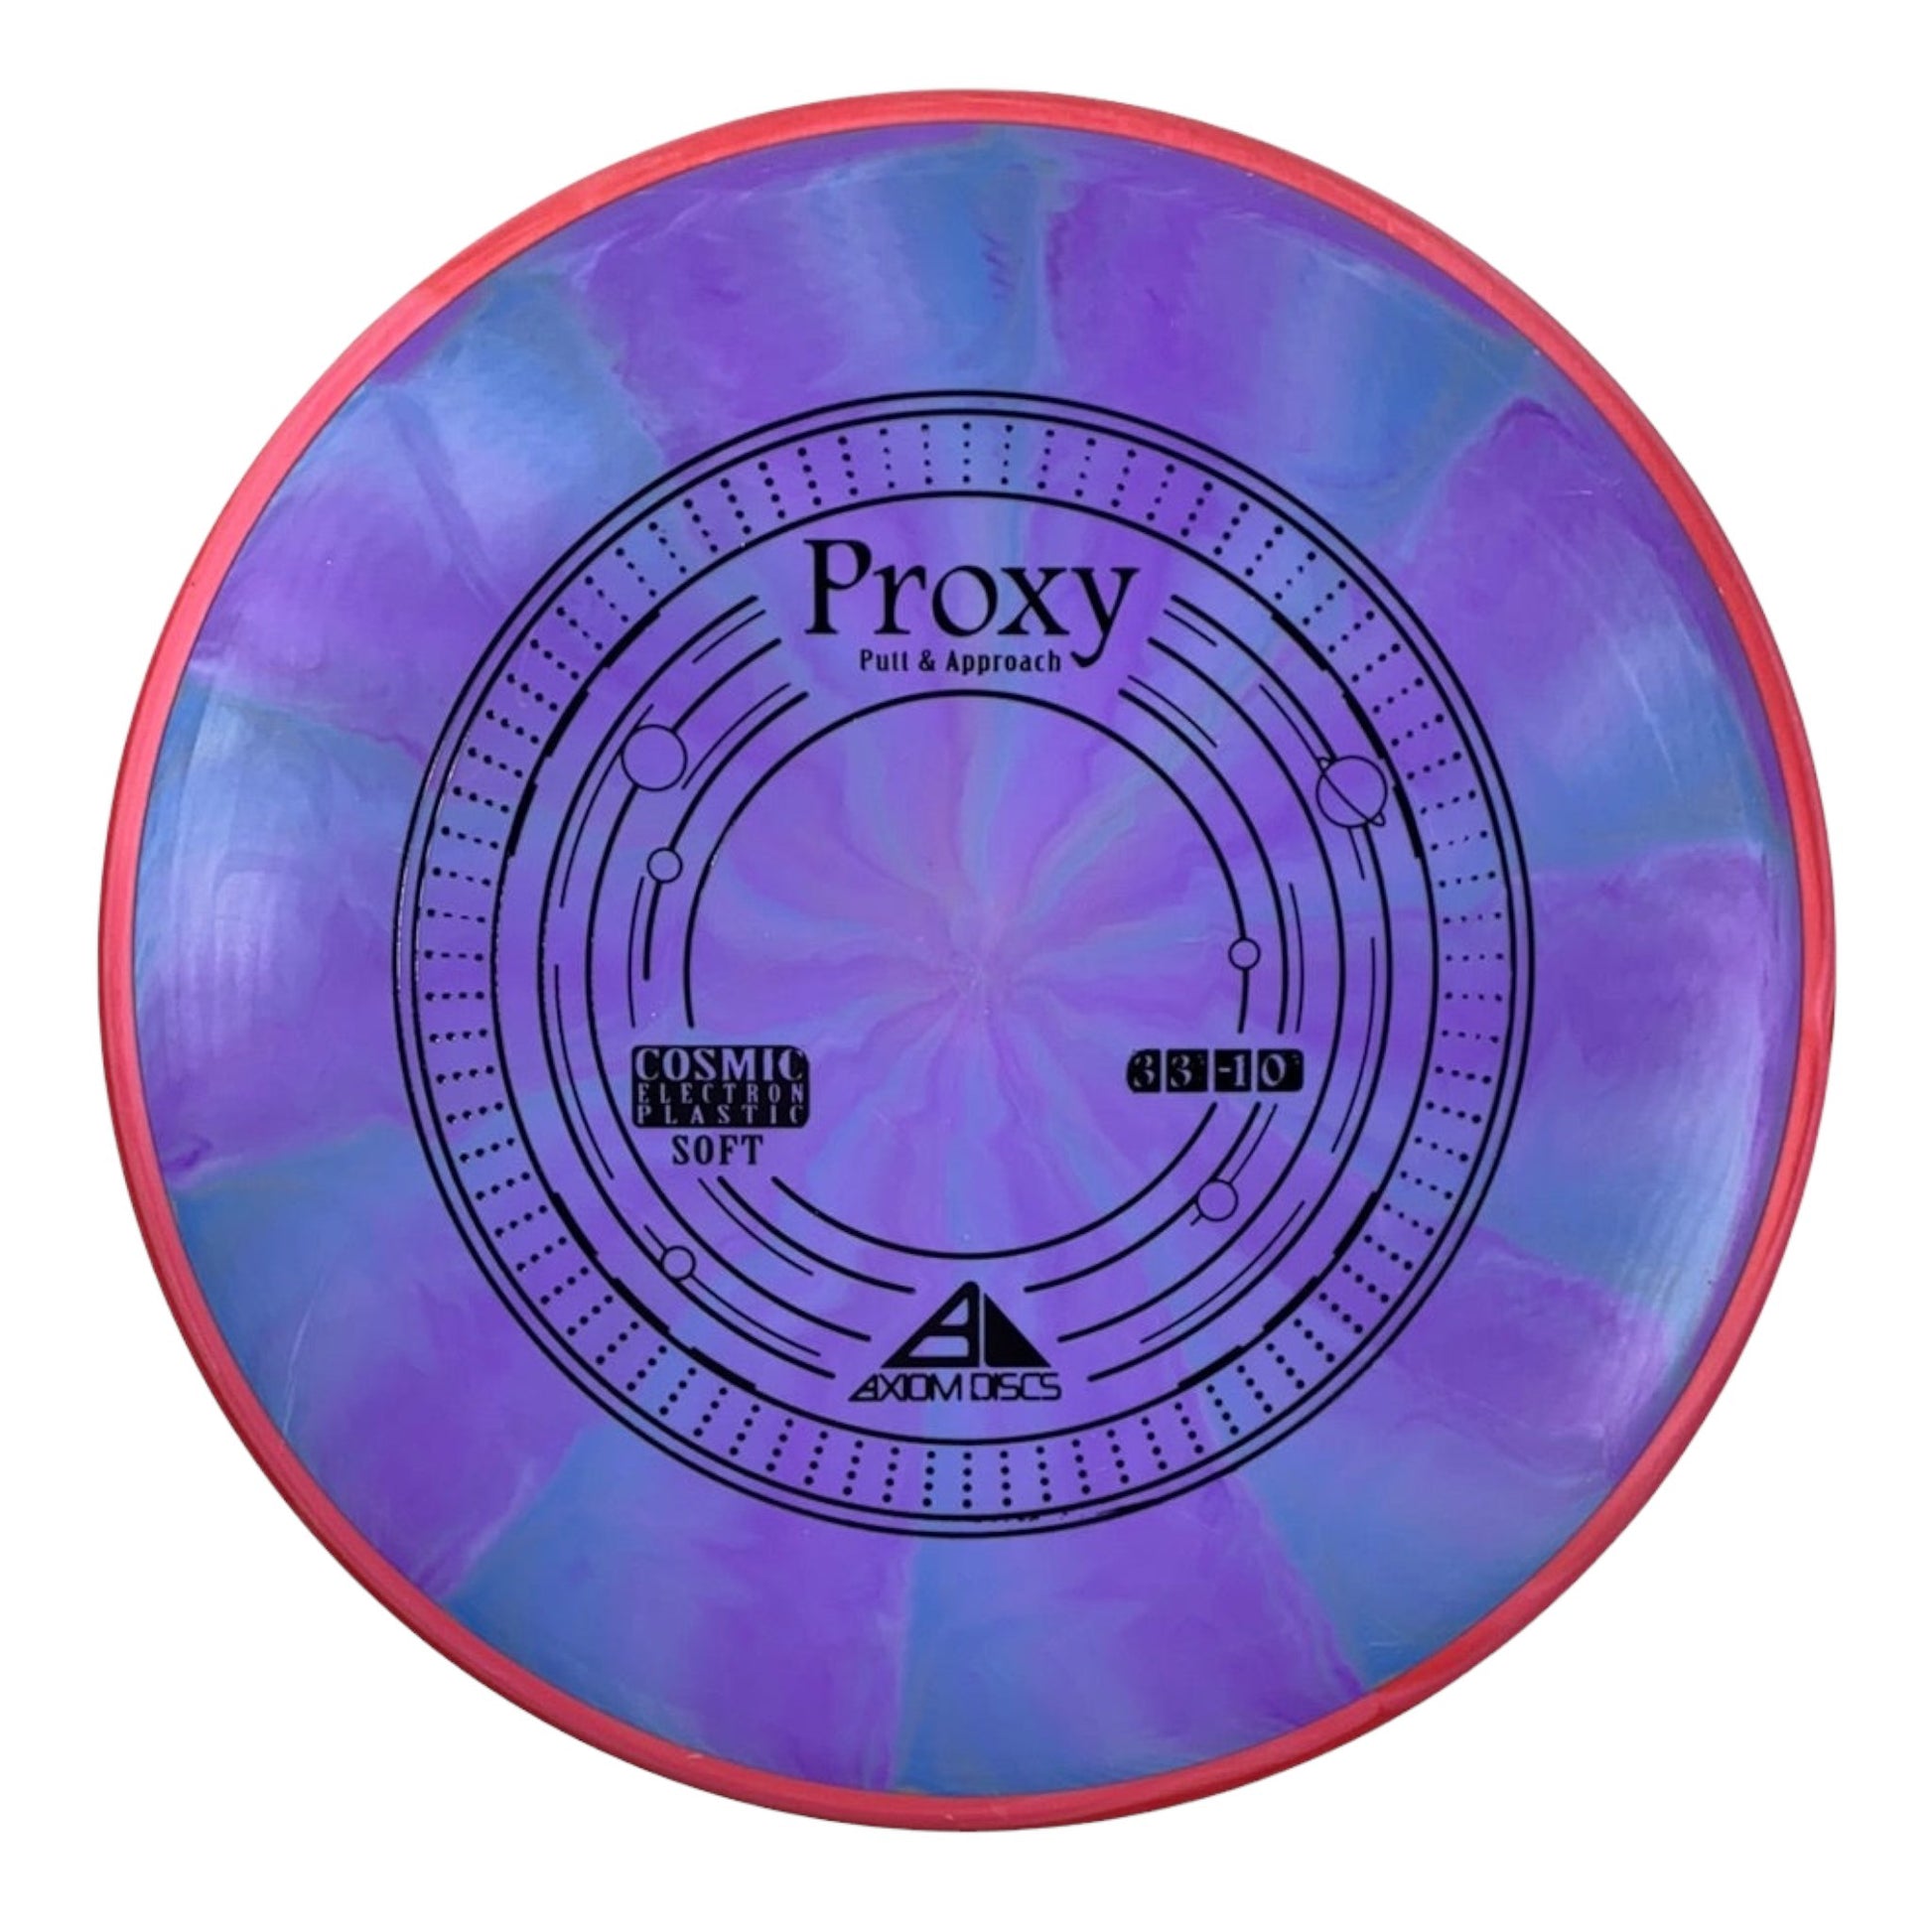 Axiom Discs Proxy | Cosmic Electron Soft | Purple/Red 171g Disc Golf